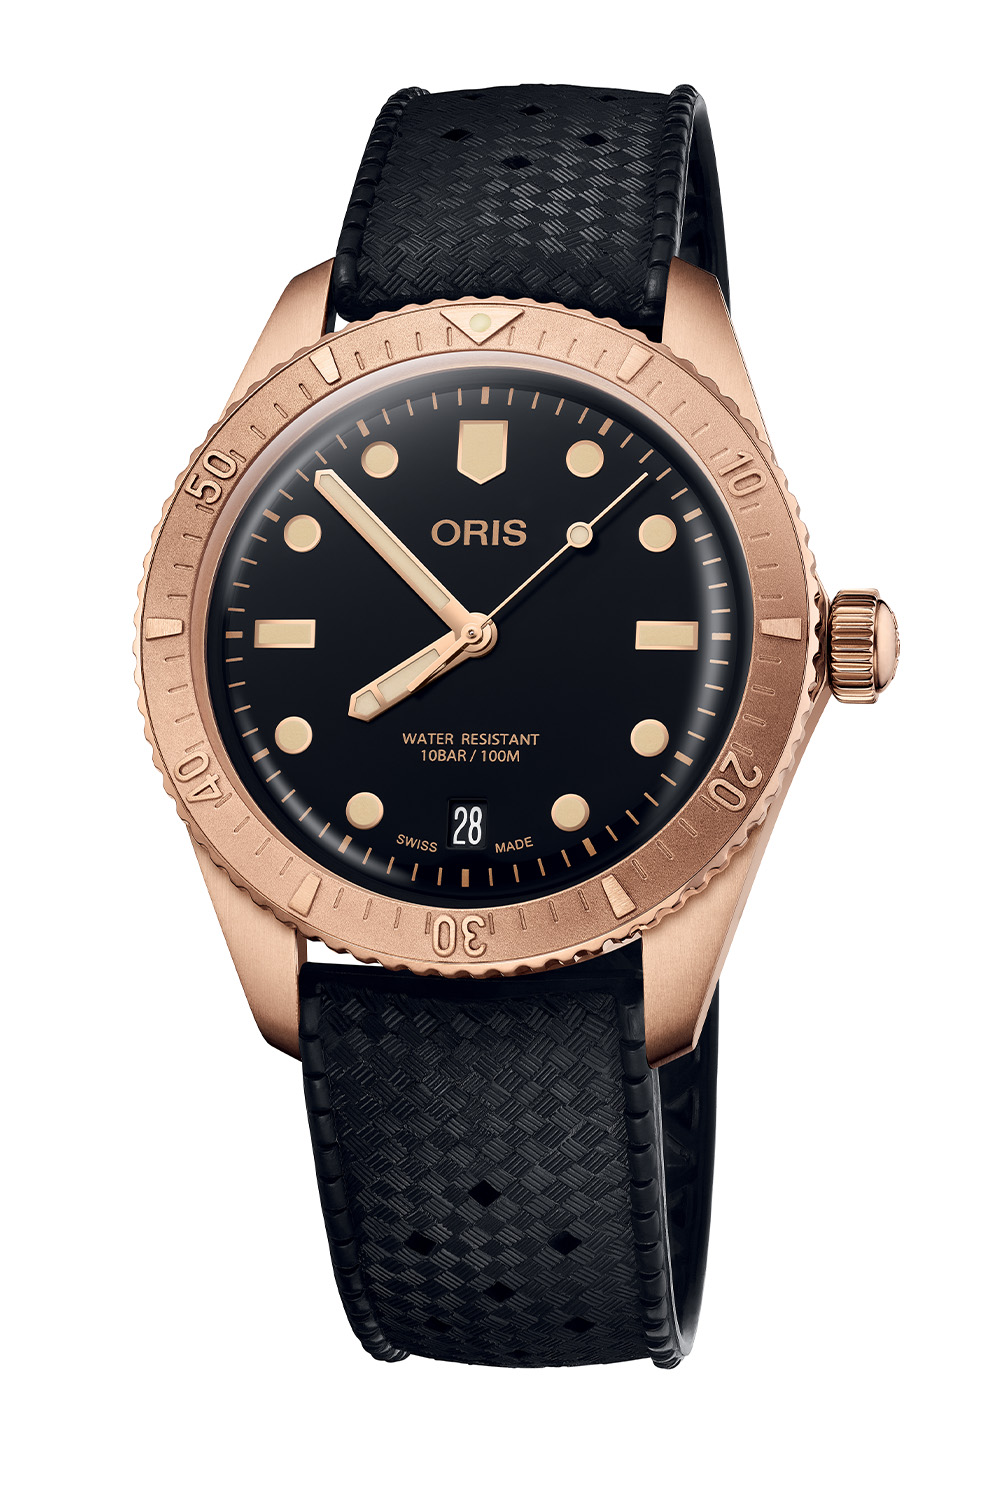 Oris Divers Sixty-Five Date Cotton Candy Sepia - black dial bronze case - 7